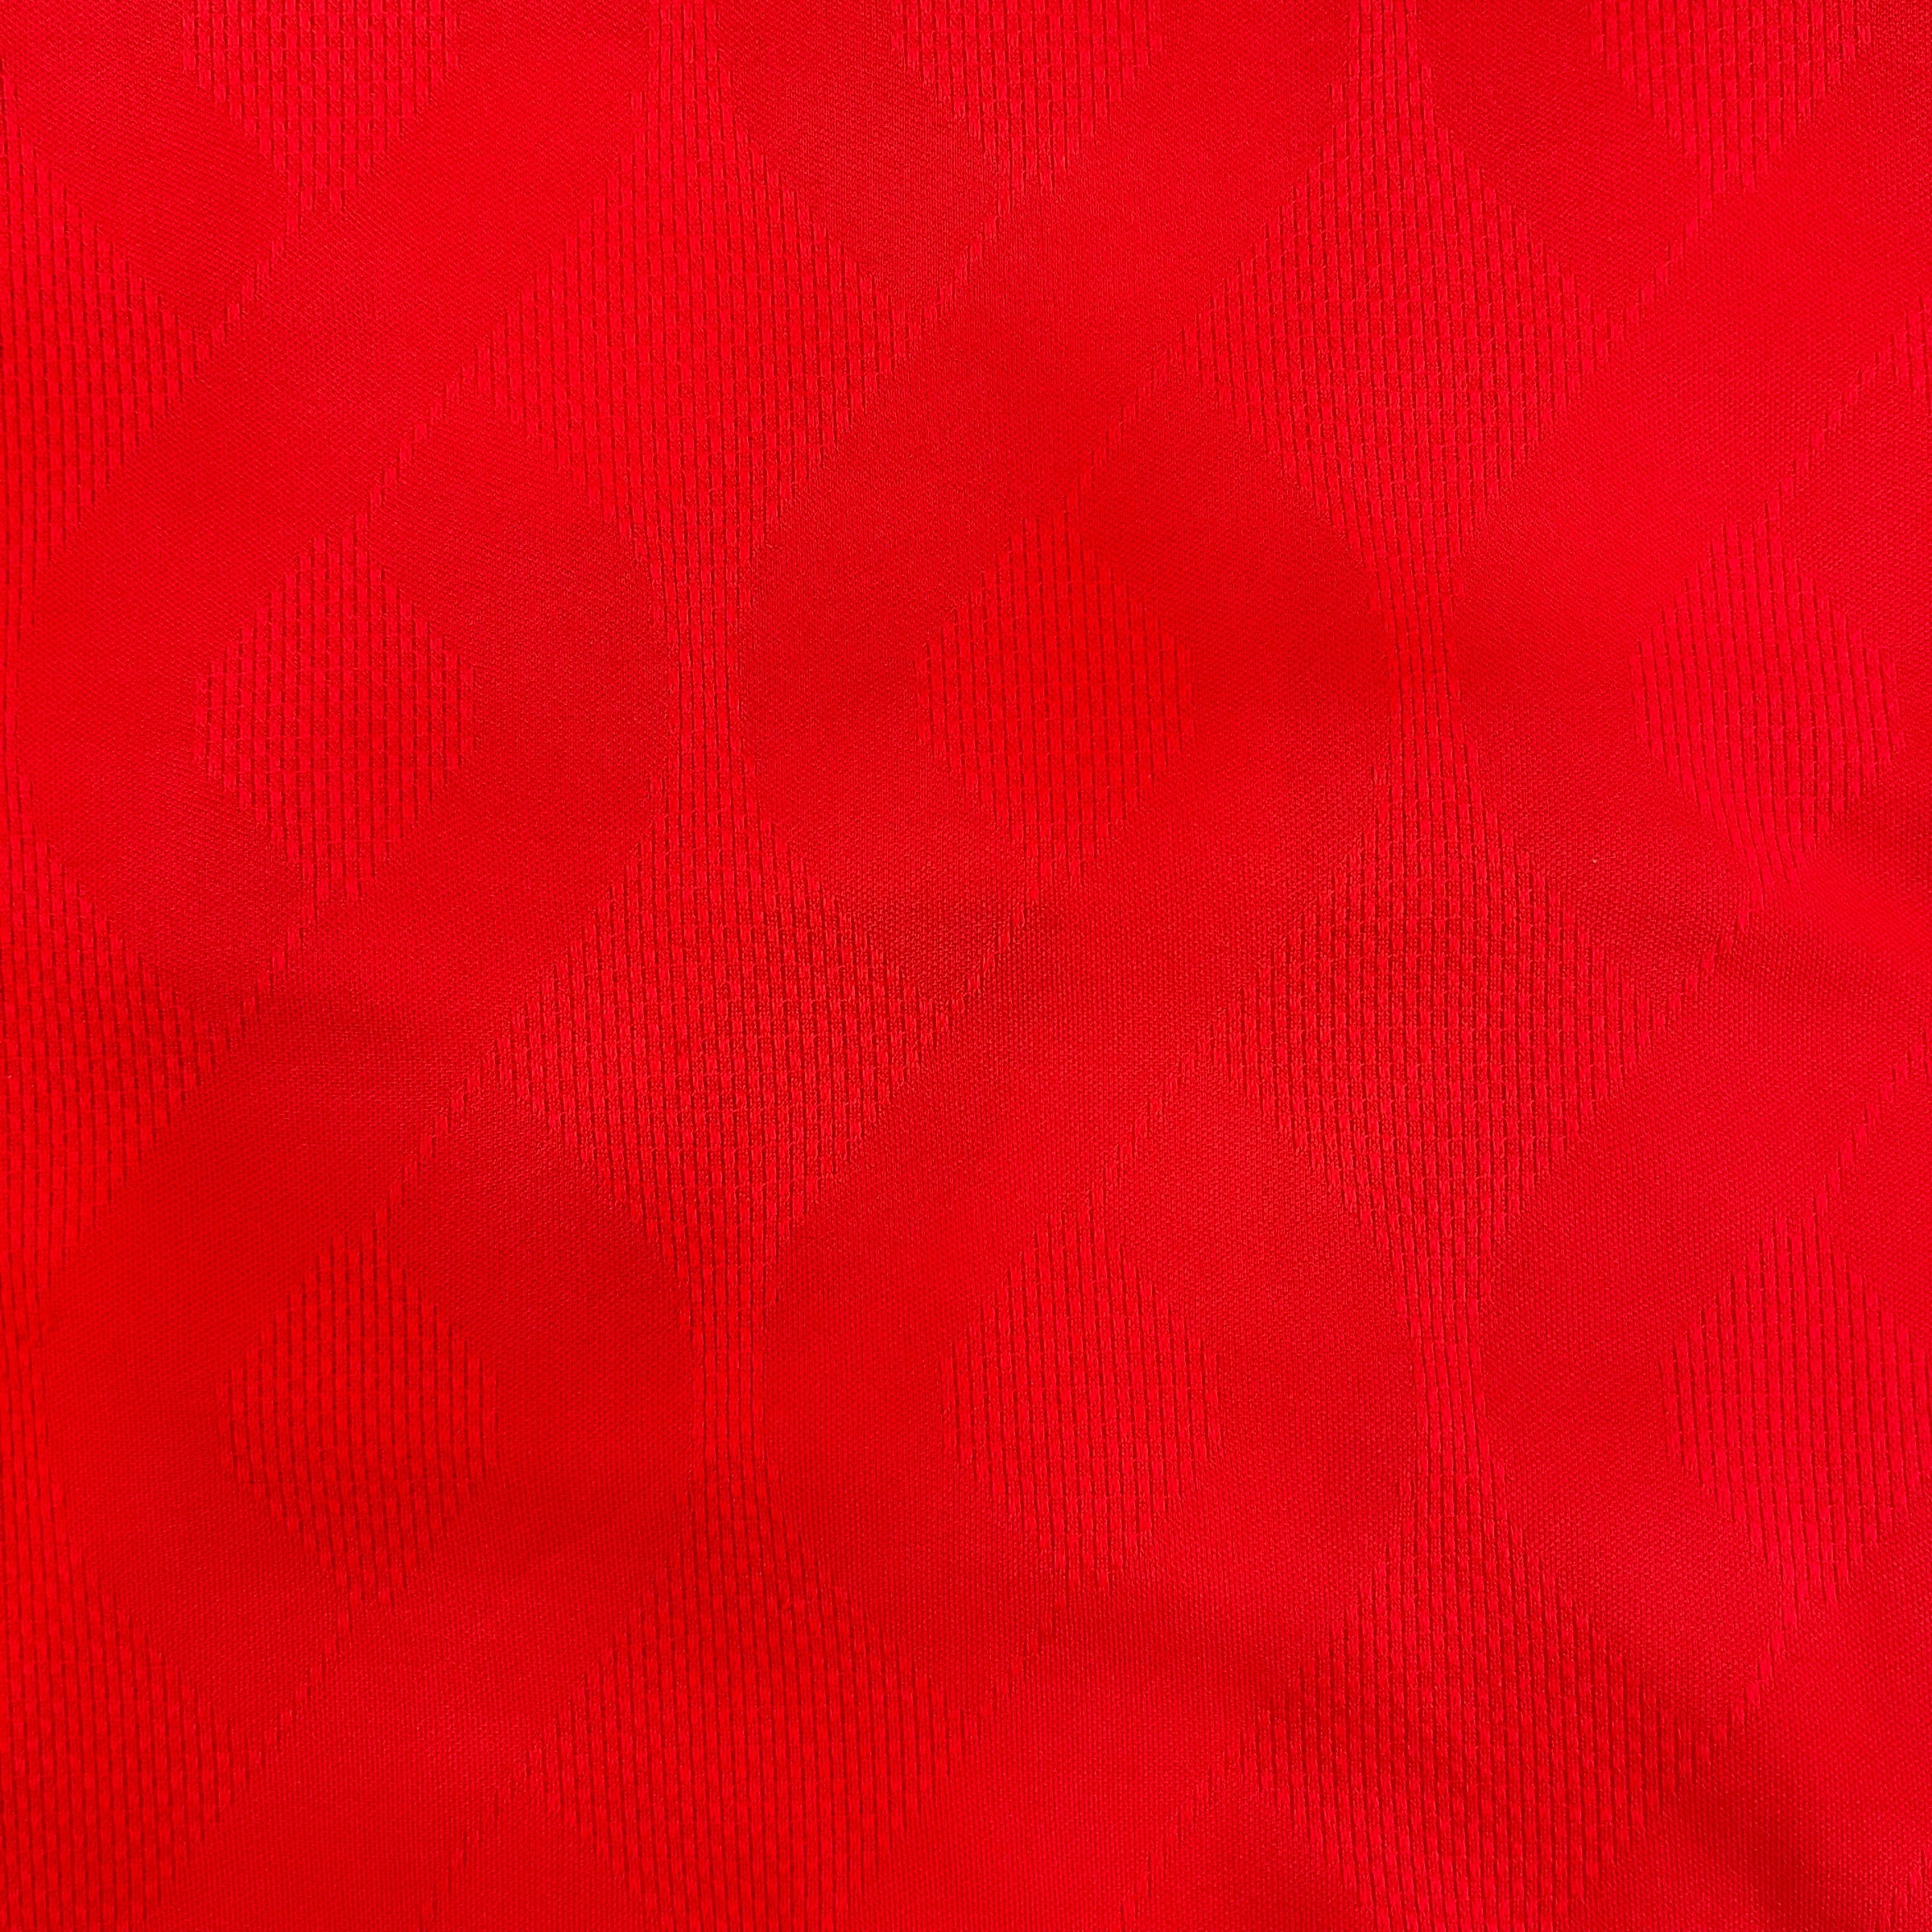 Vintage Umbro Practice Soccer Jersey Red